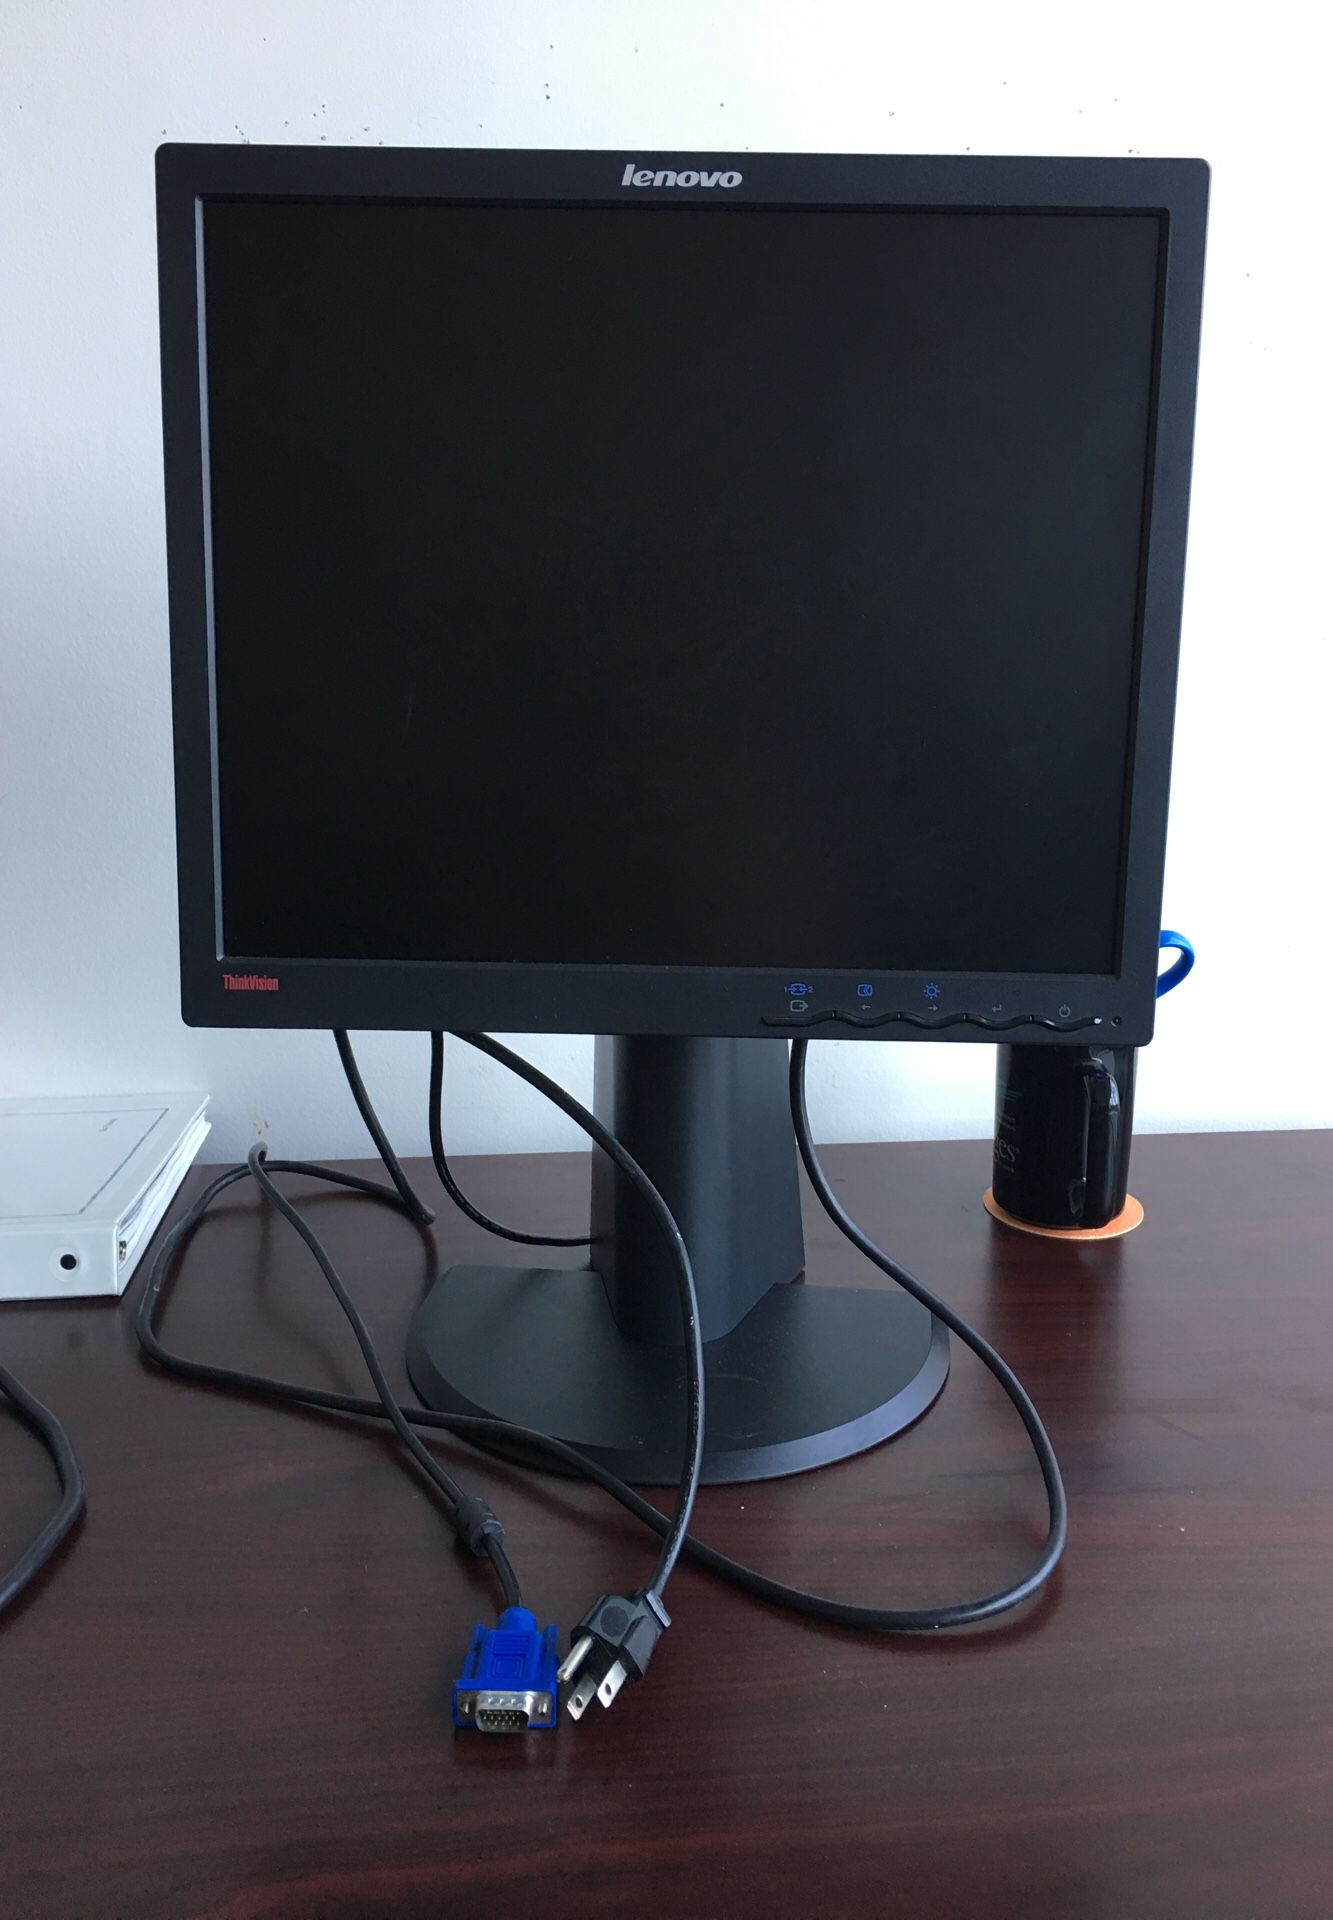 Lenovo 9417- HC2 LCD monitor with power cord & VGA cable